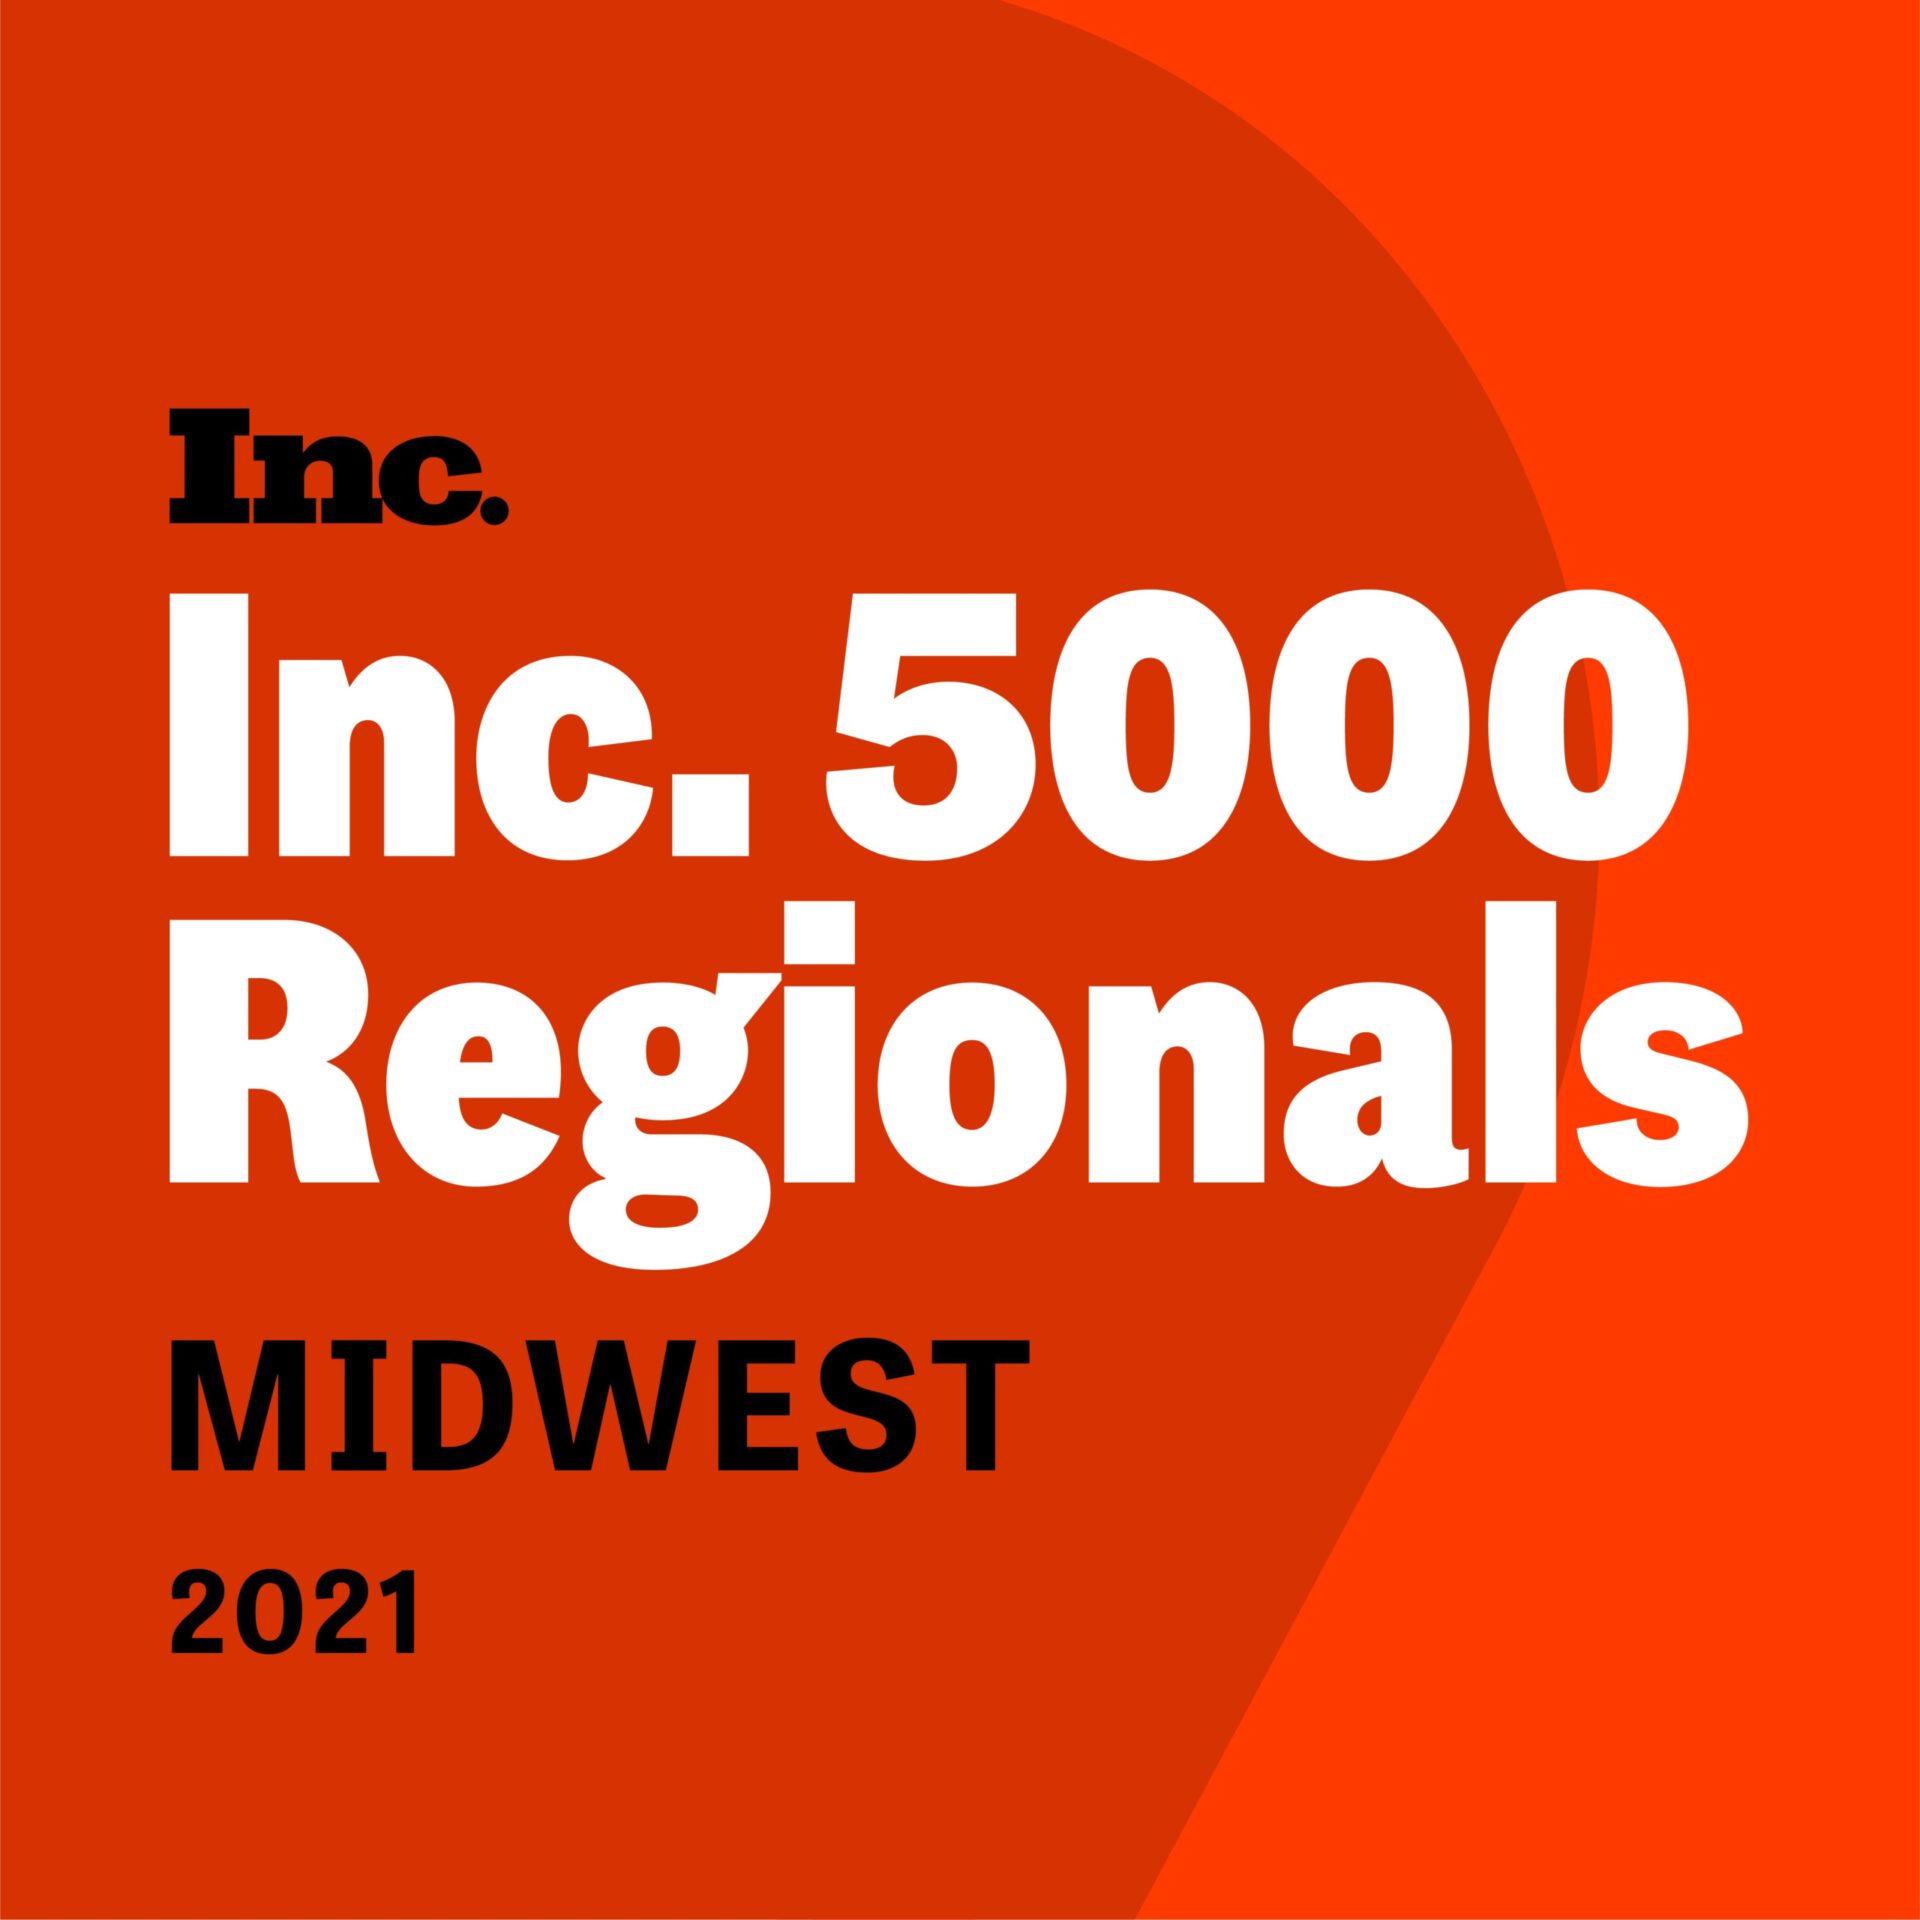 Innovatemap named No. 218 on Inc. Magazine 5000 Regionals Midwest List